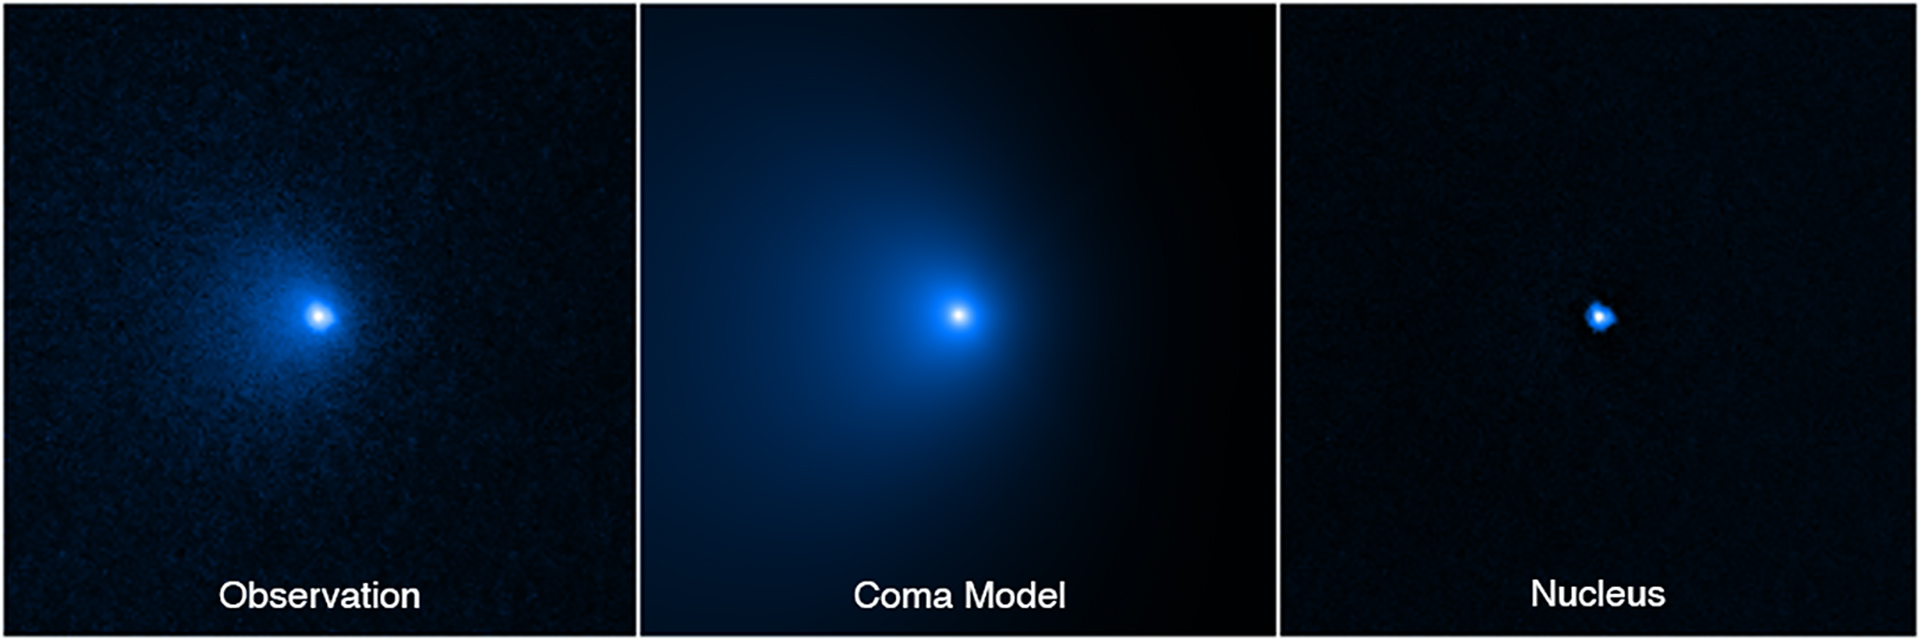 Comet C/2014 UN271 Nucleus